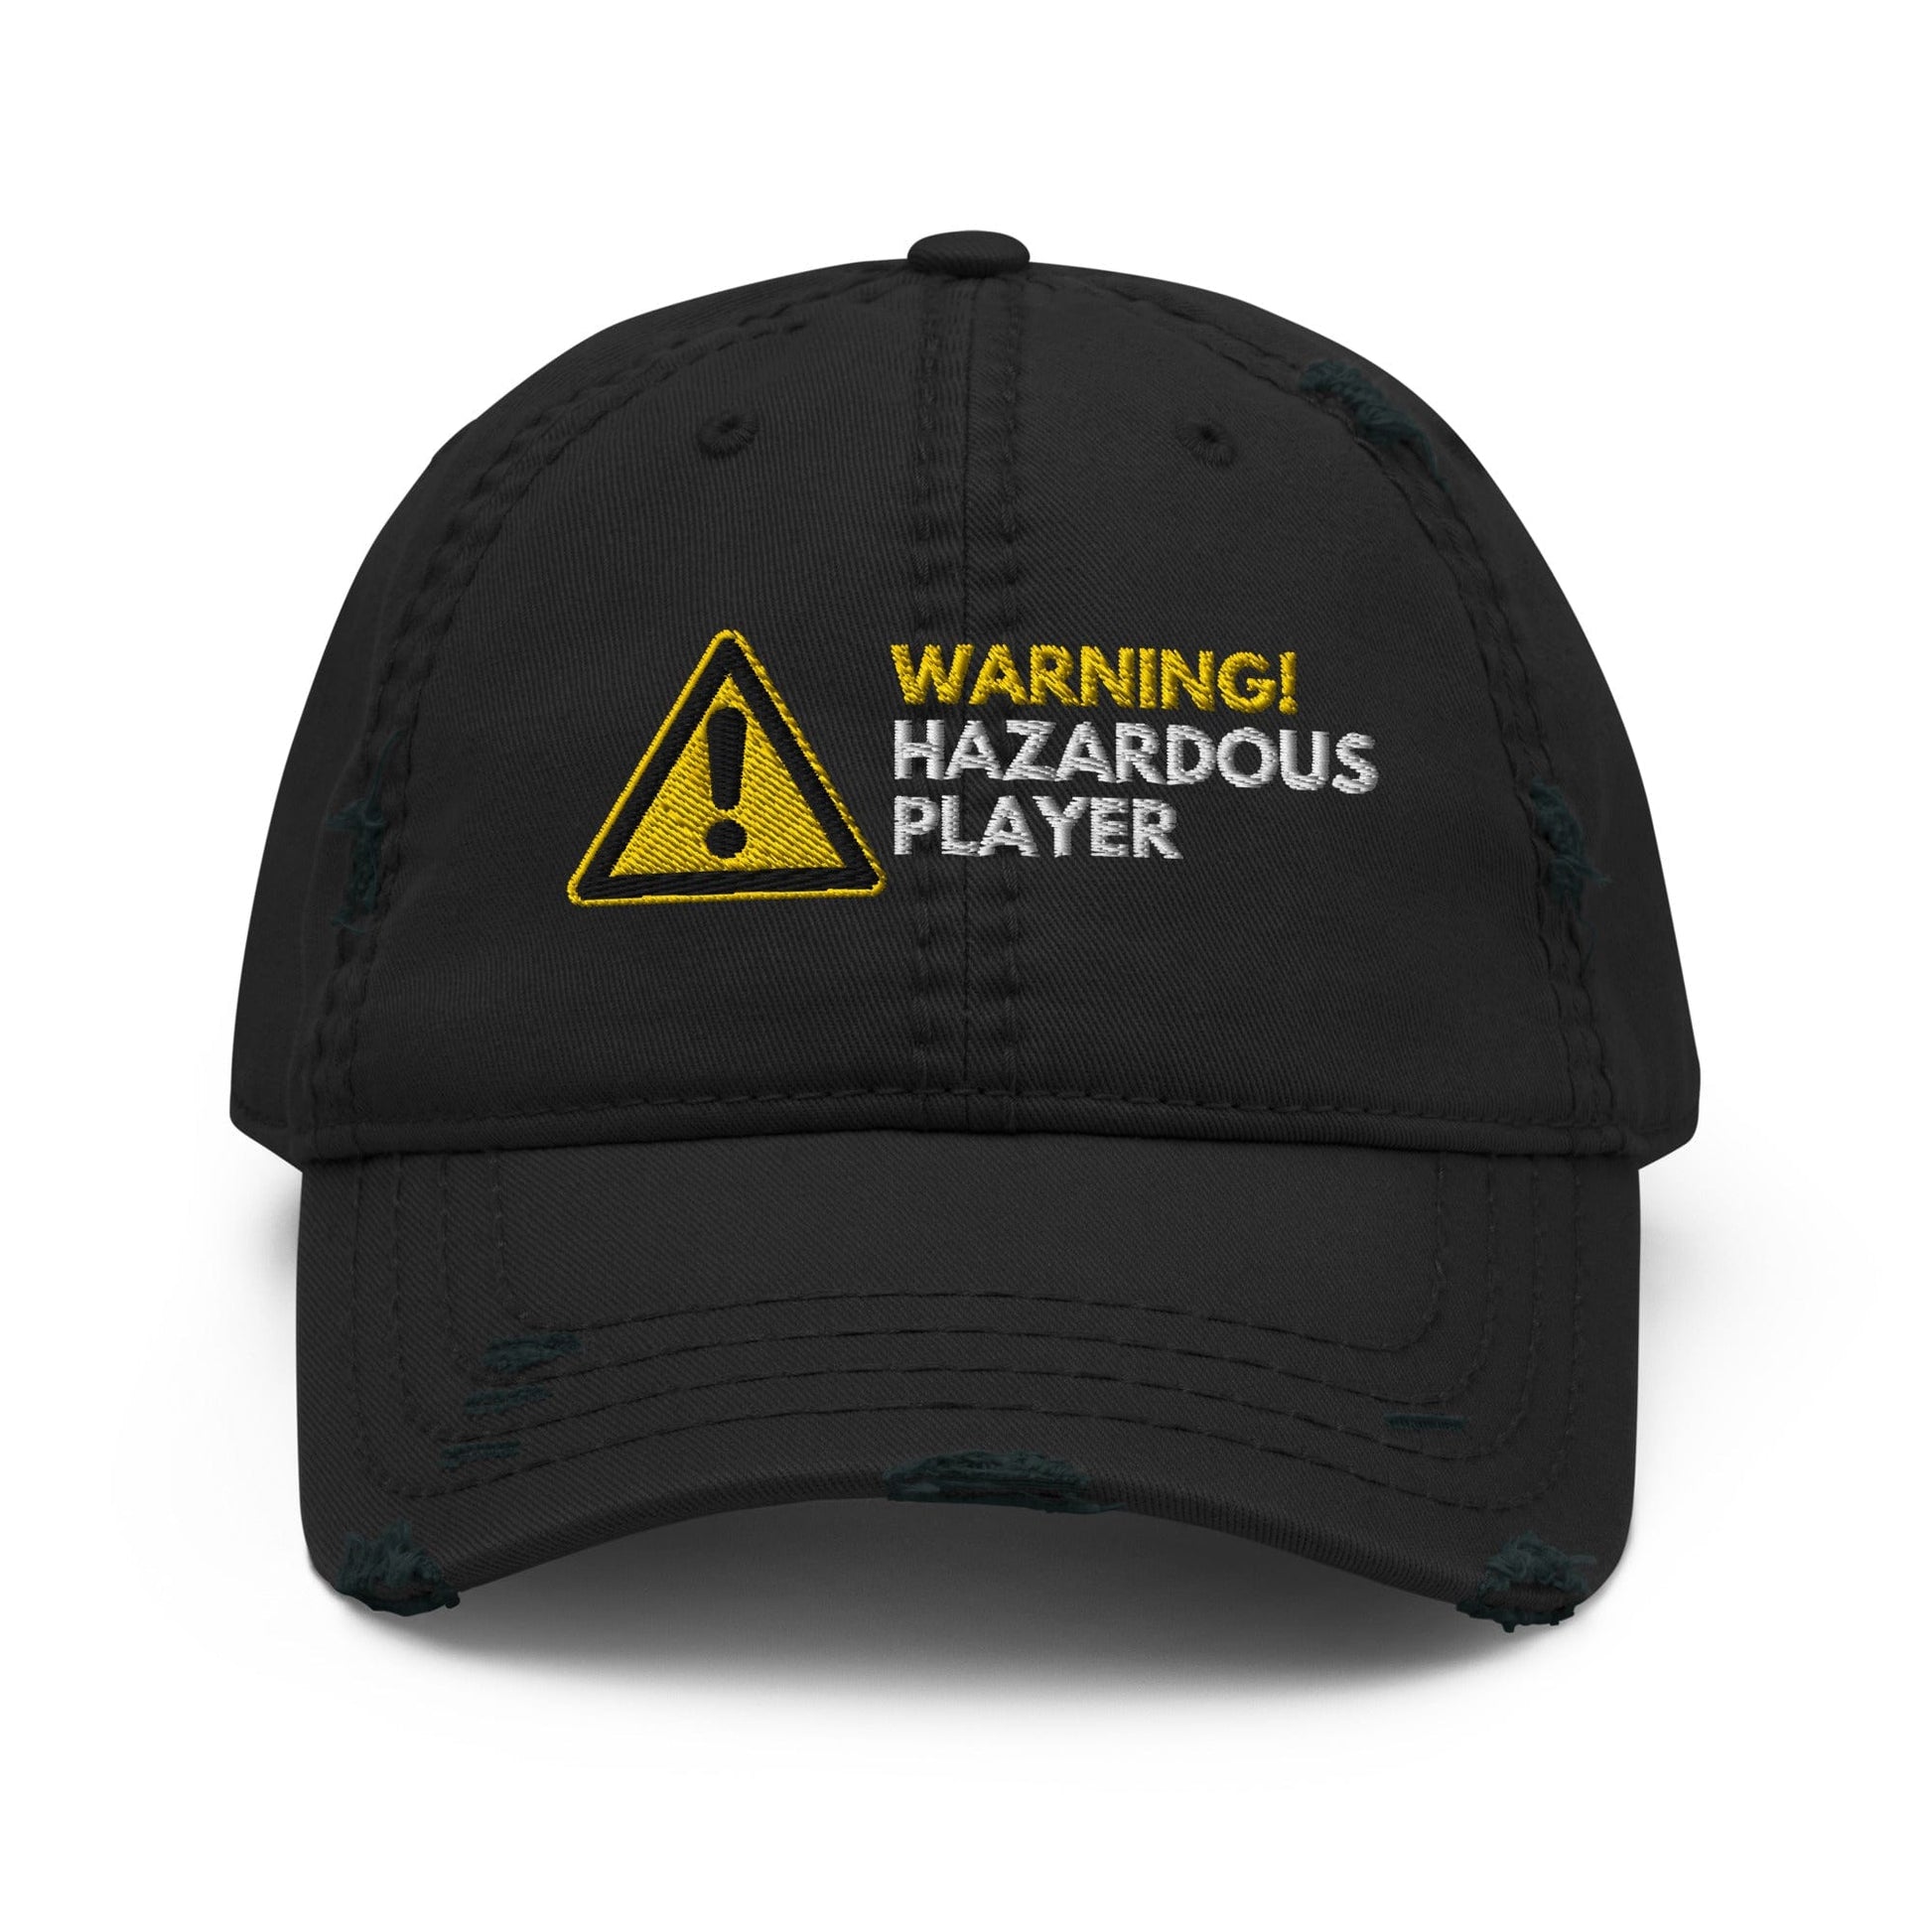 Funny Golfer Gifts  Distressed Cap Black Warning Hazardous Player Distressed Hat